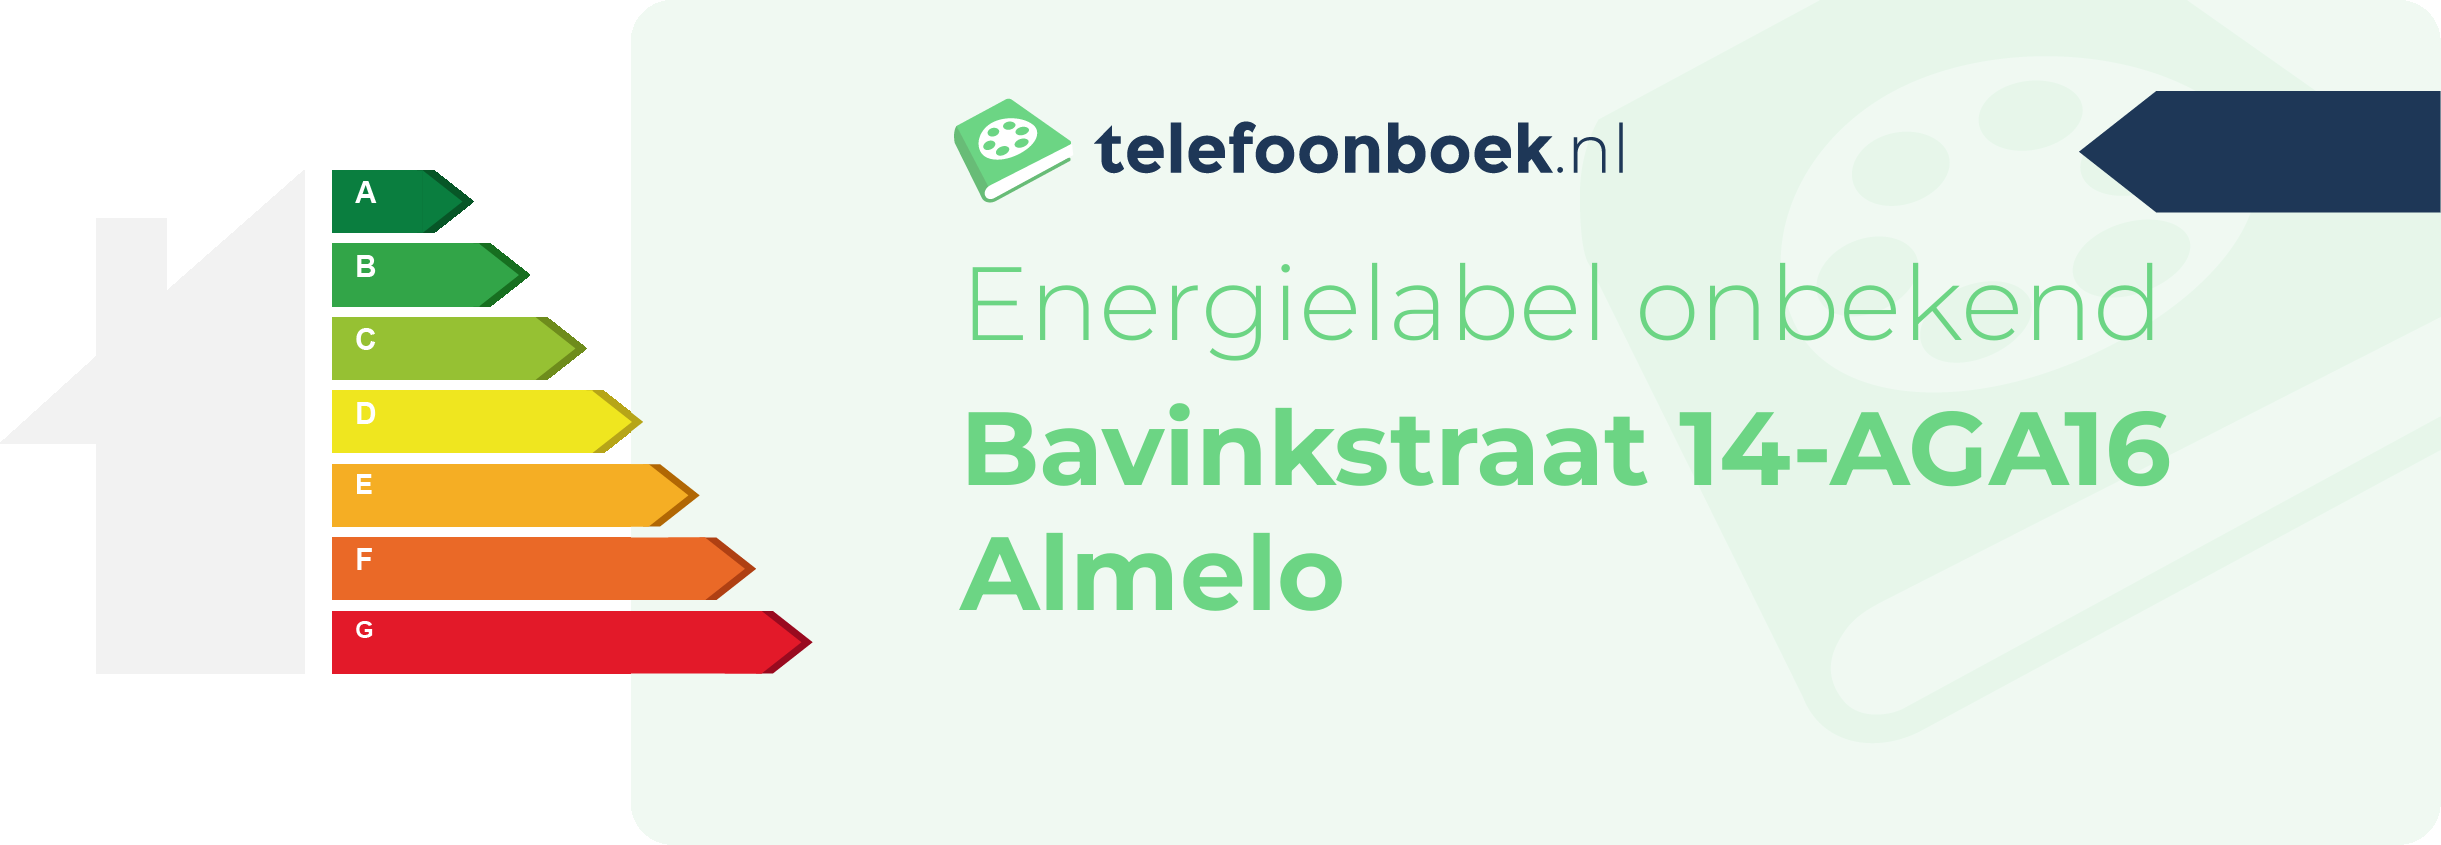 Energielabel Bavinkstraat 14-AGA16 Almelo